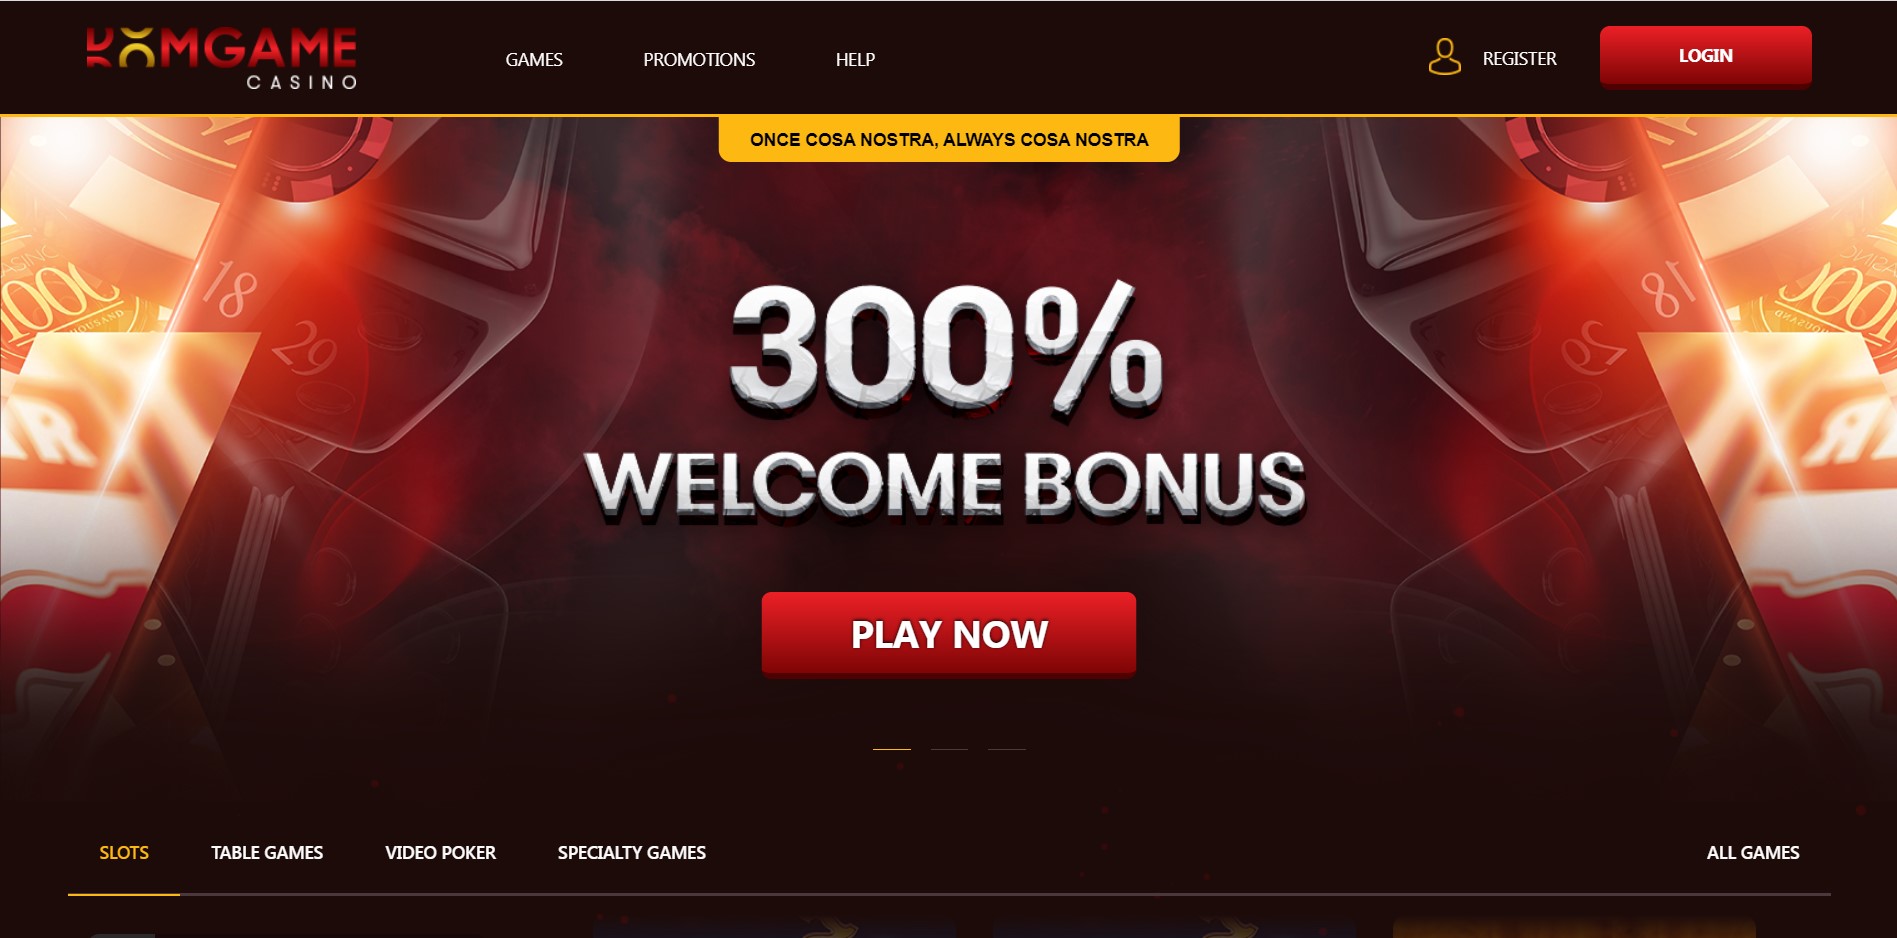 Domgame casino Homepage